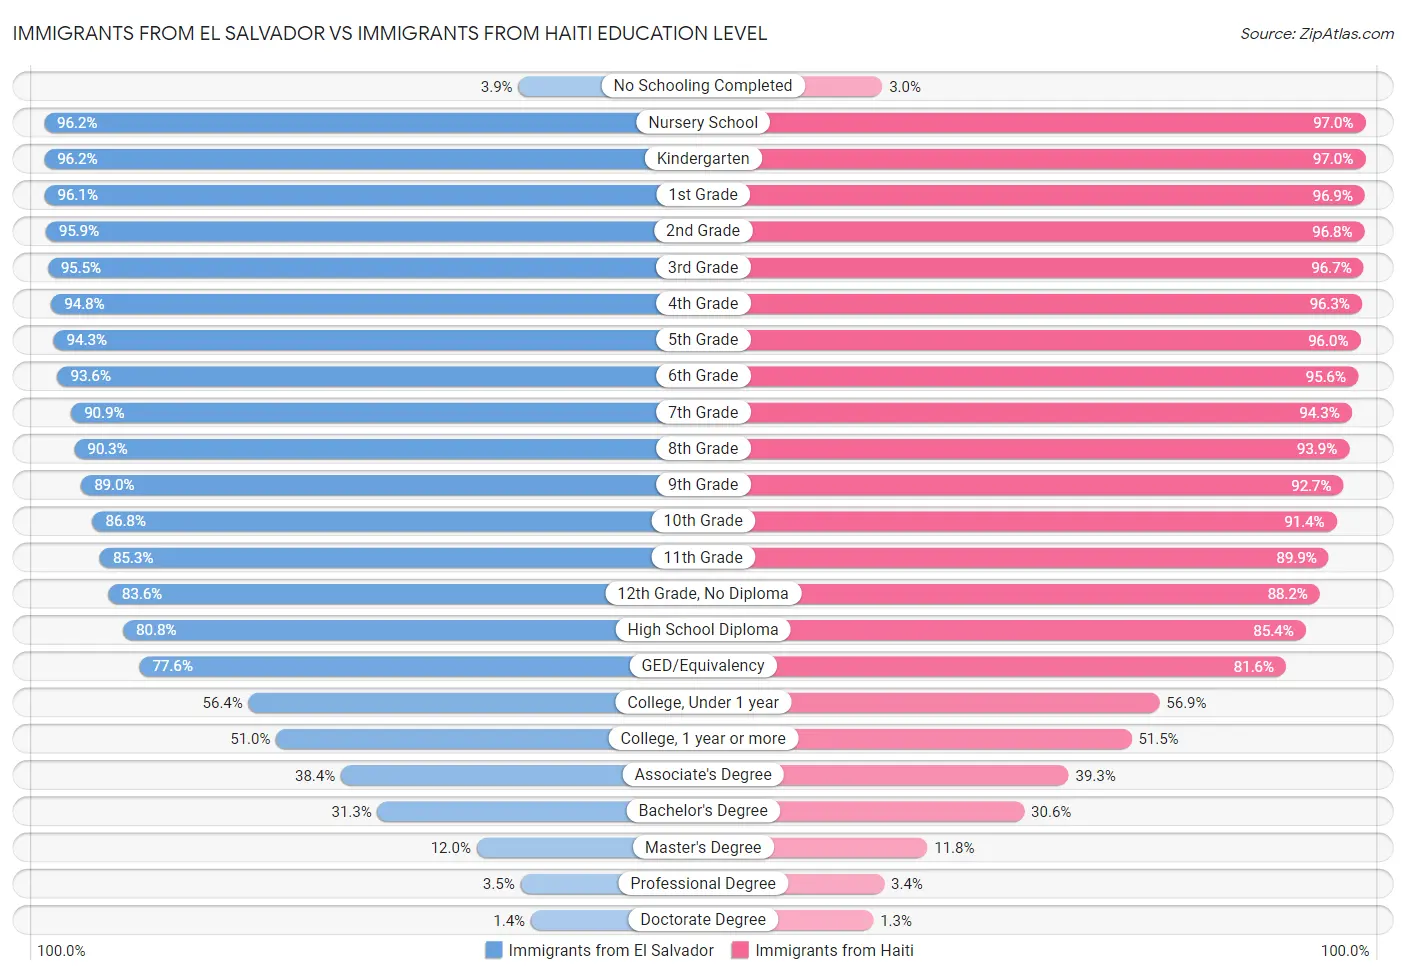 Immigrants from El Salvador vs Immigrants from Haiti Education Level